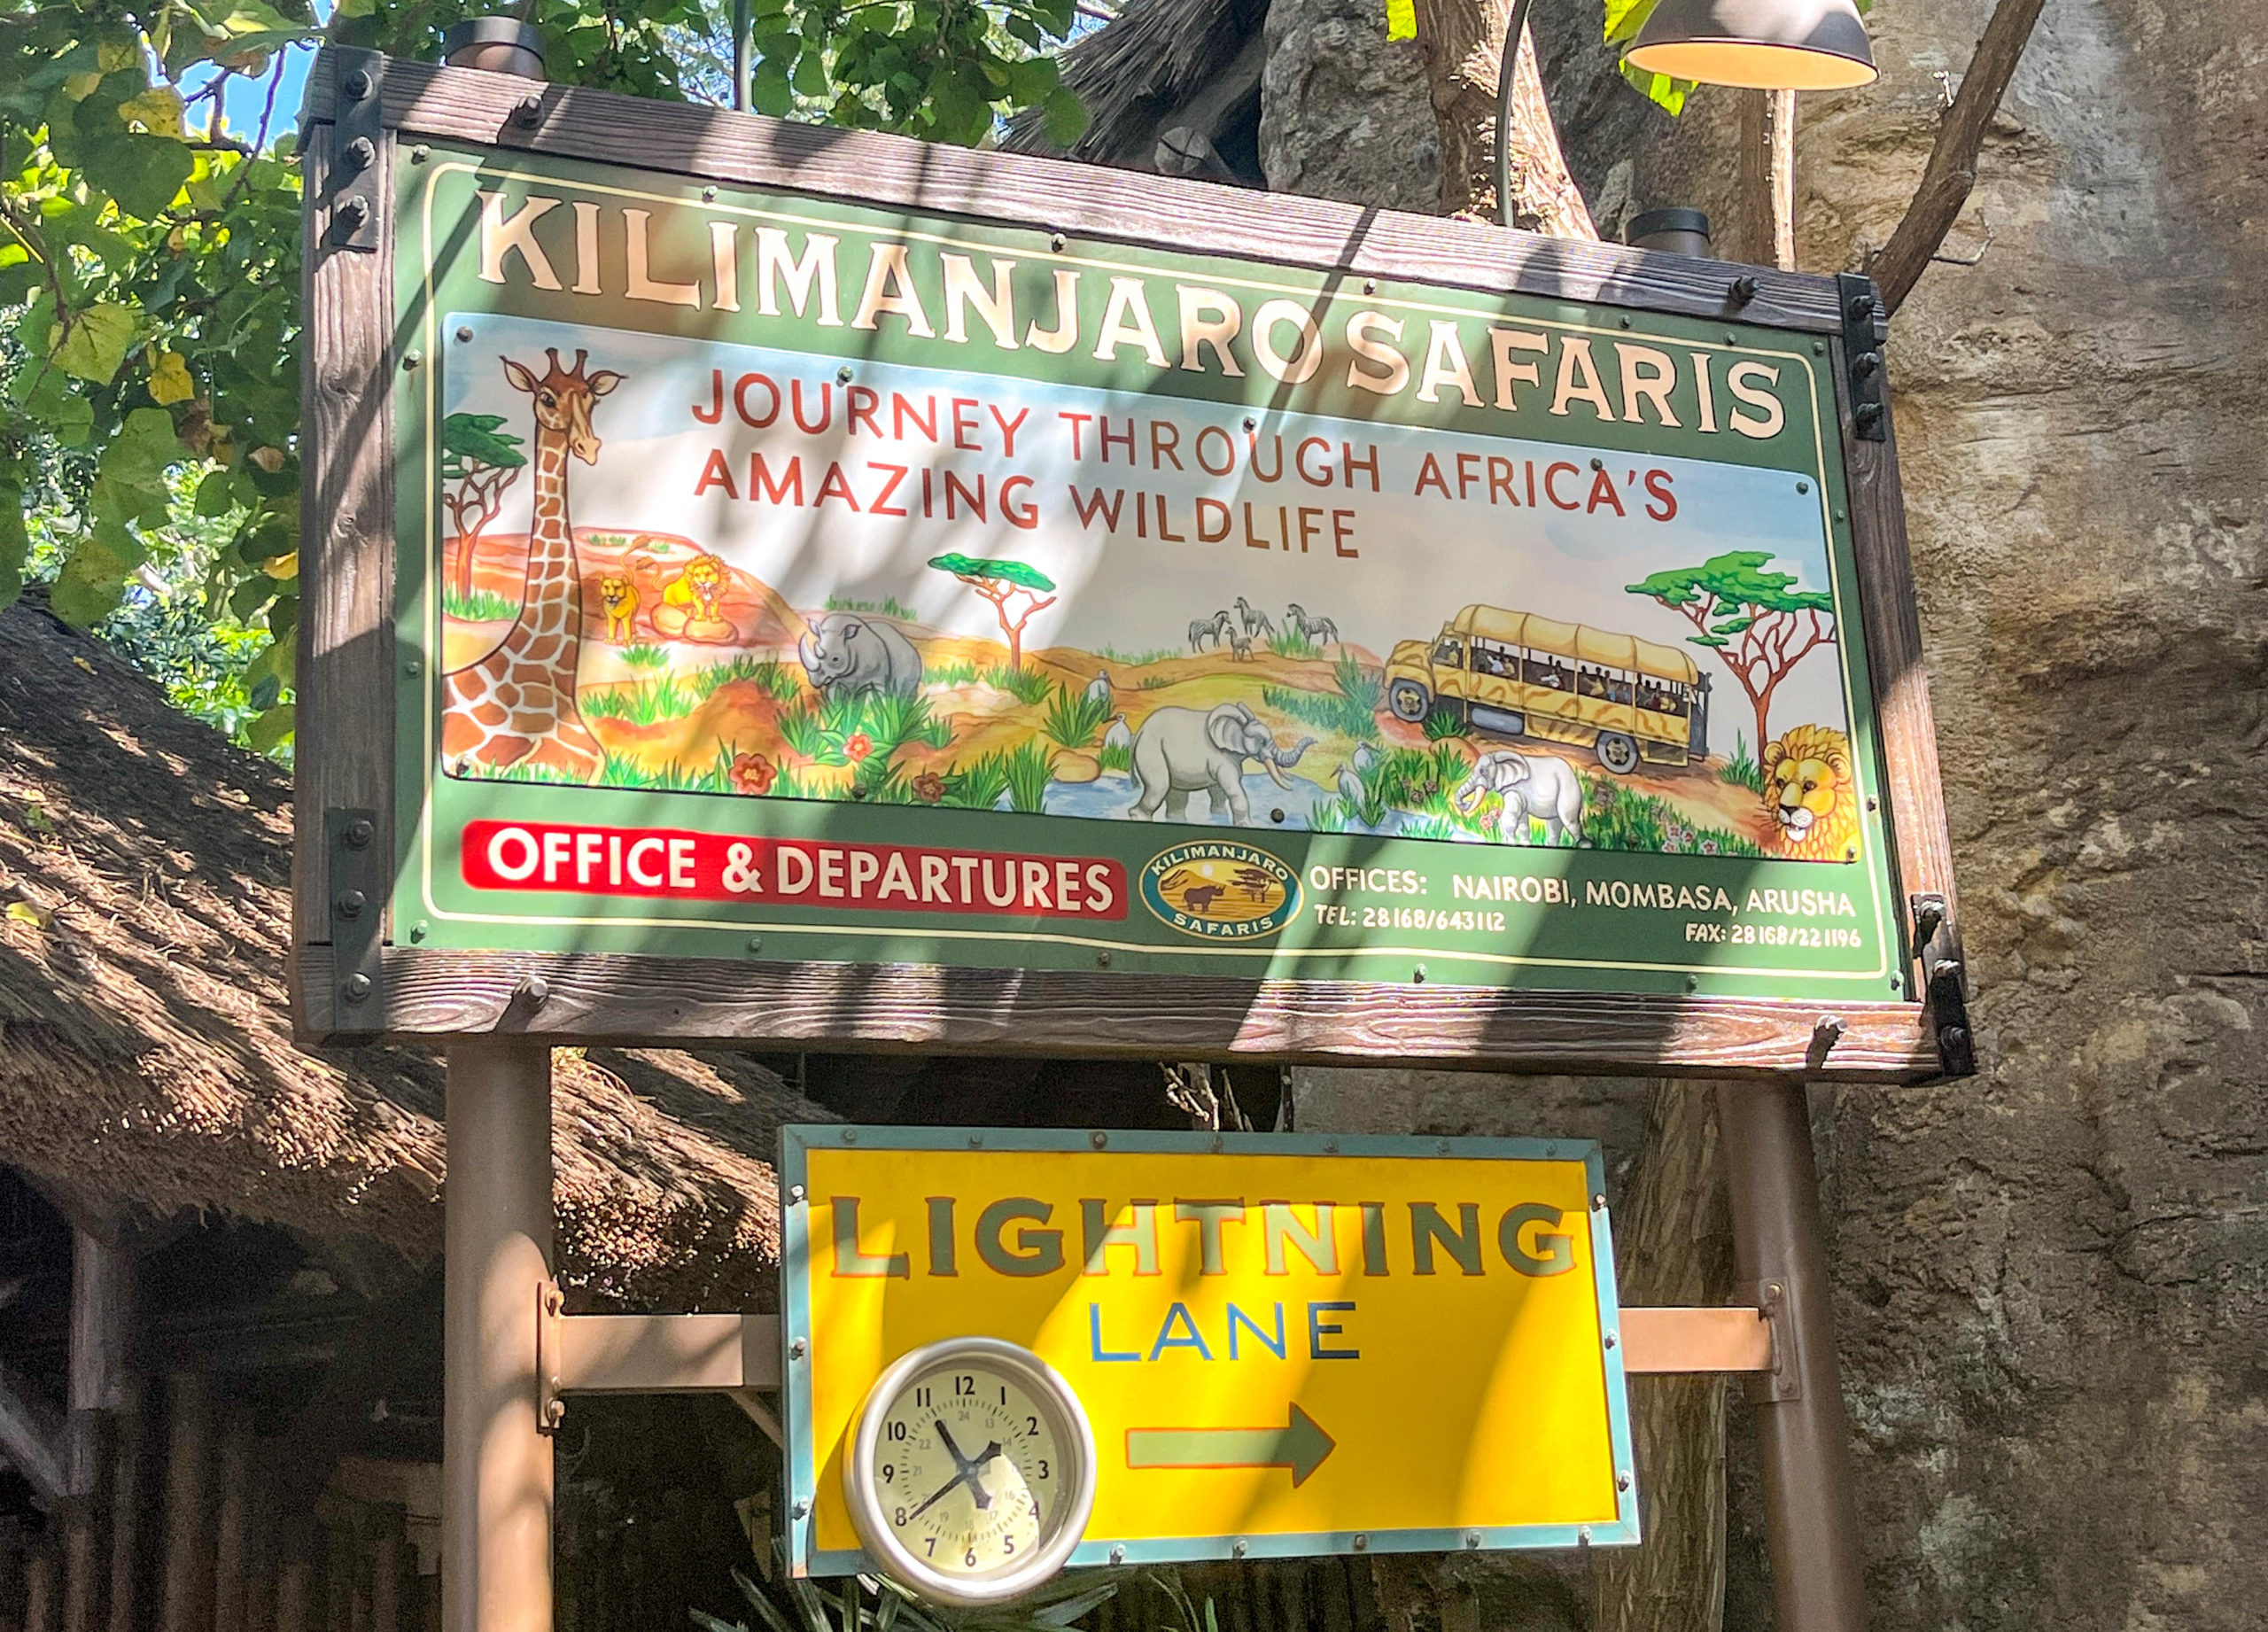 Kilimanjaro safaris sign